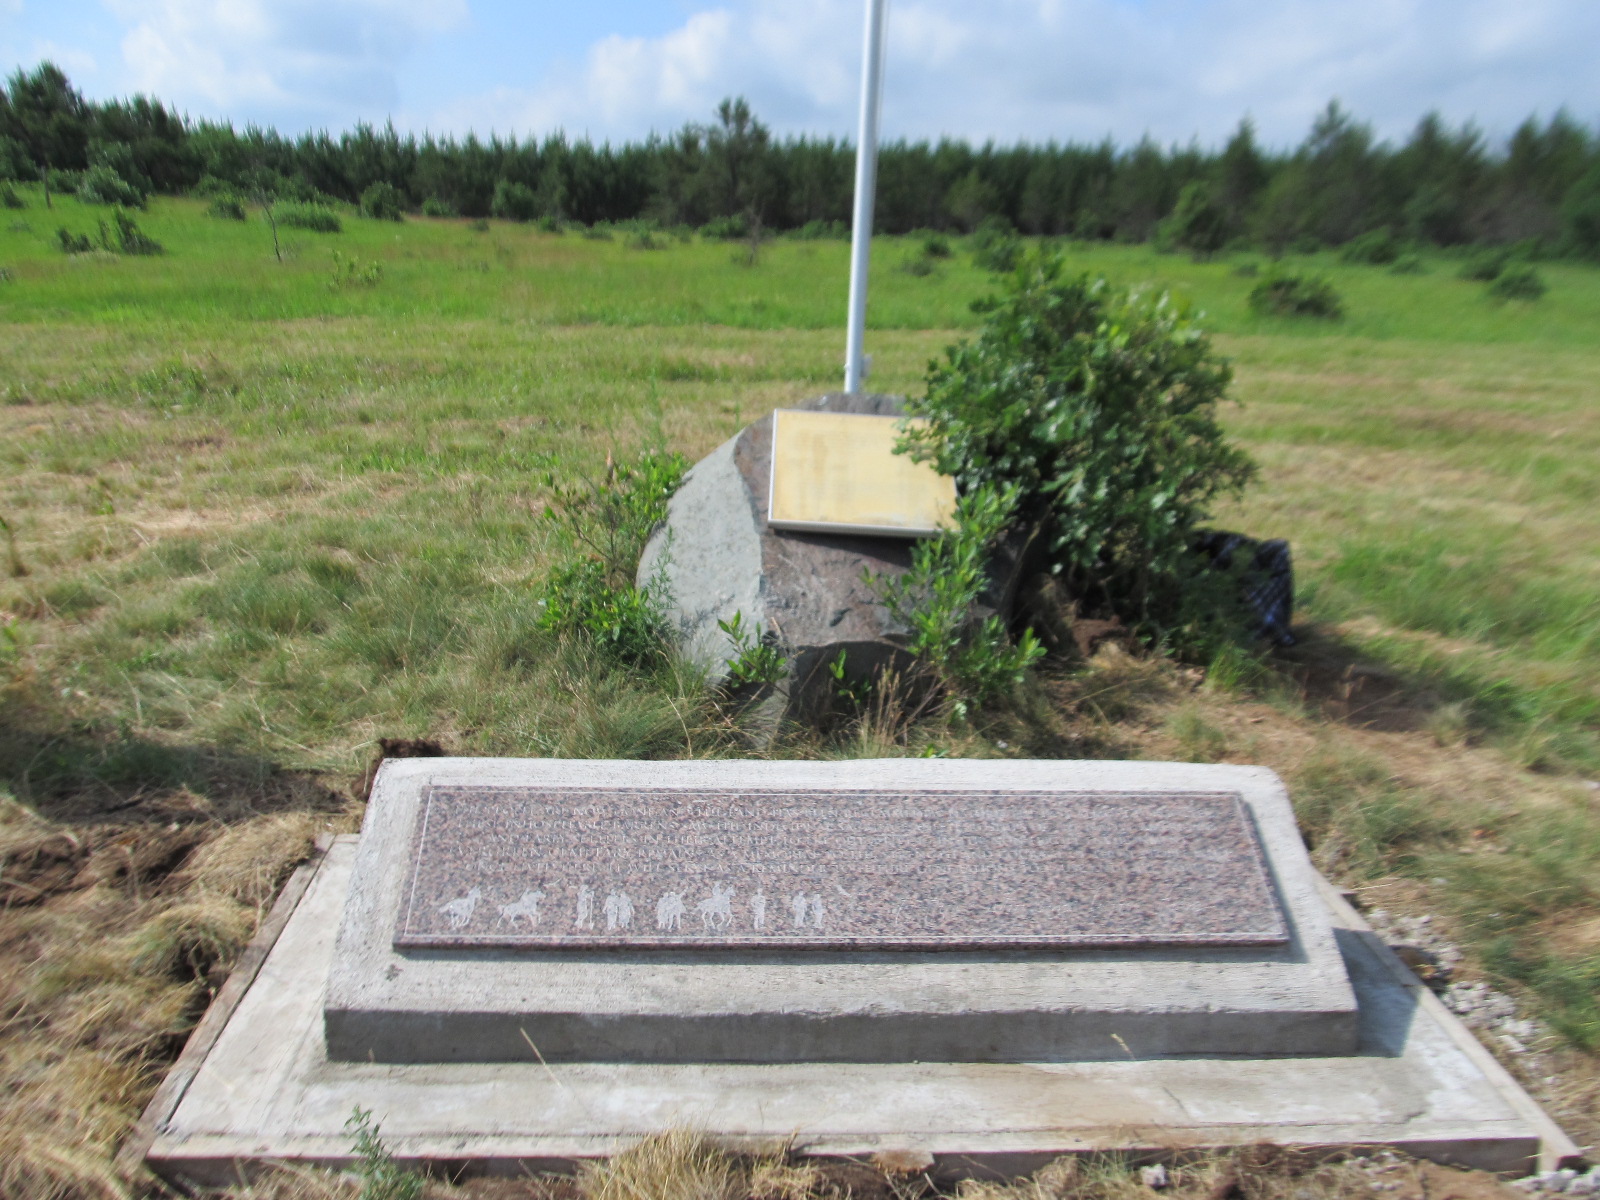 Dedication stone at Evergreen Cemetery